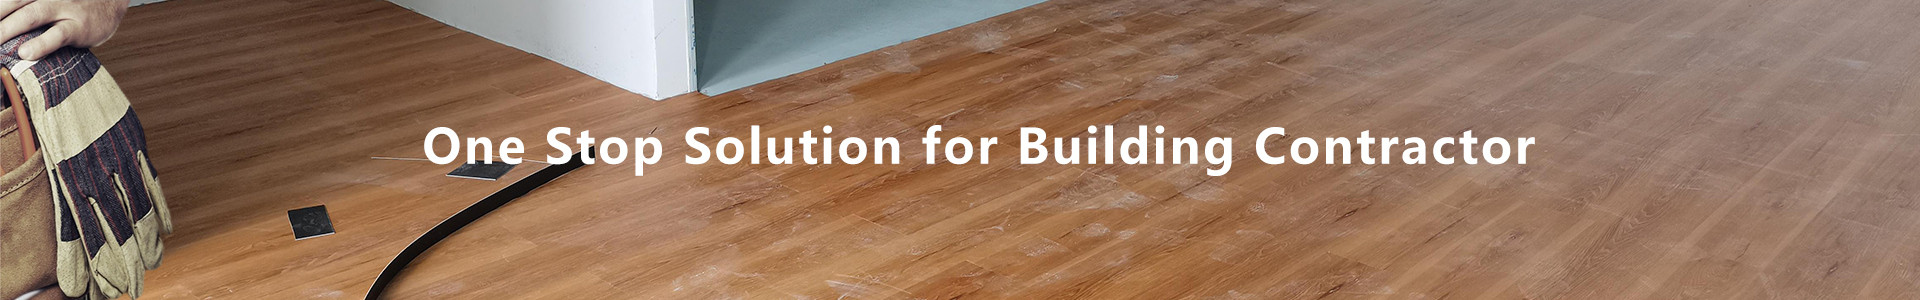 LVT Flooring for Building Contractor